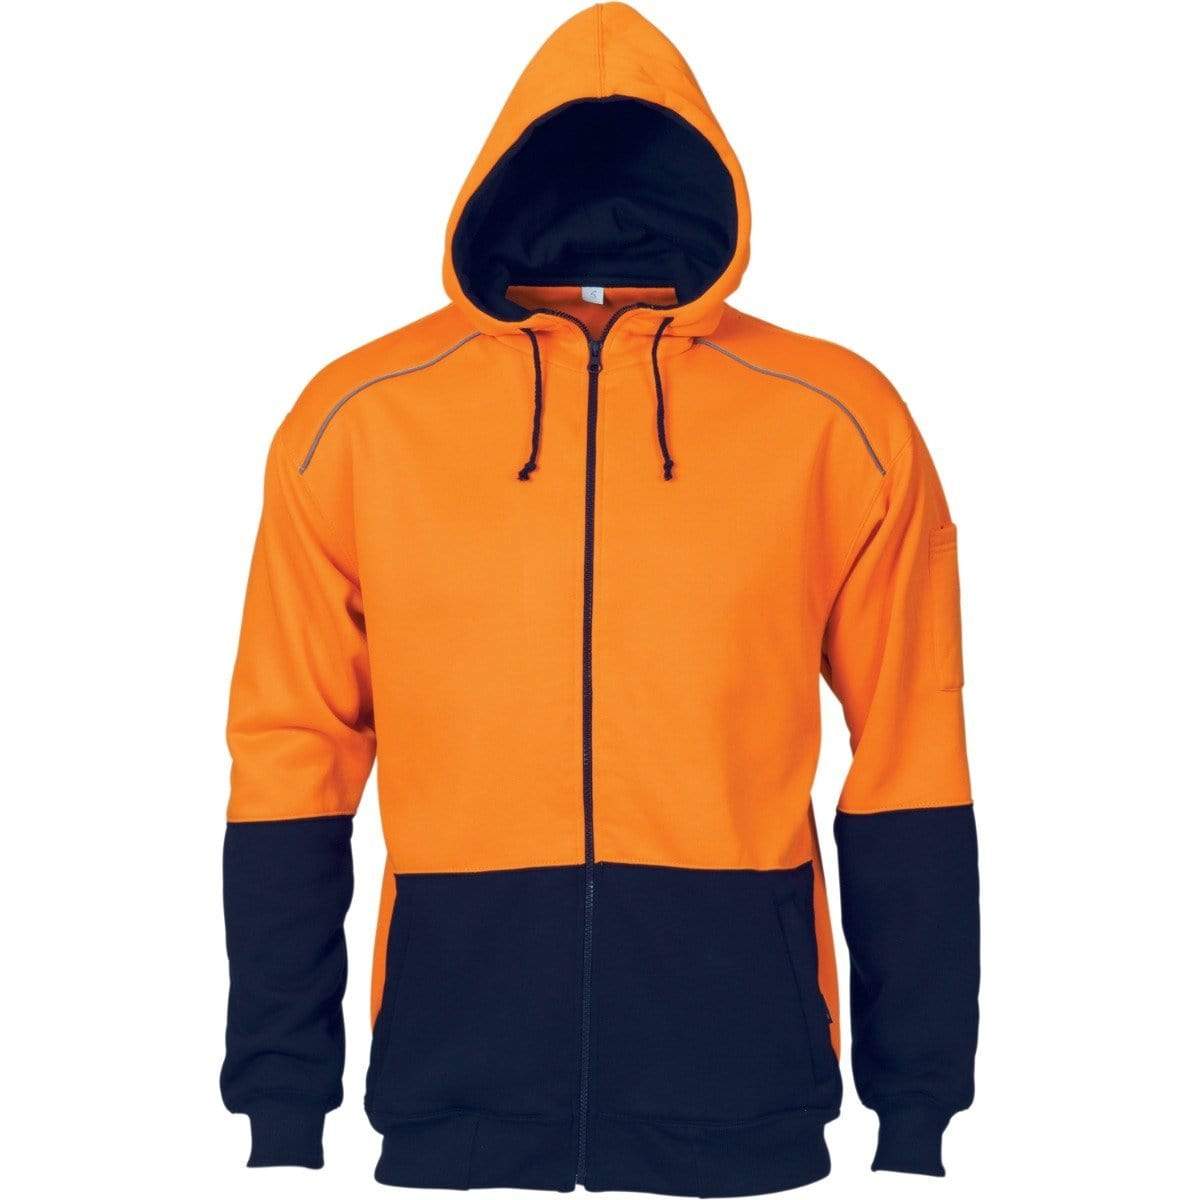 Dnc Workwear Hi-vis Contrast Piping Fleecy Hoodie - 3728 Work Wear DNC Workwear Orange/Navy S 